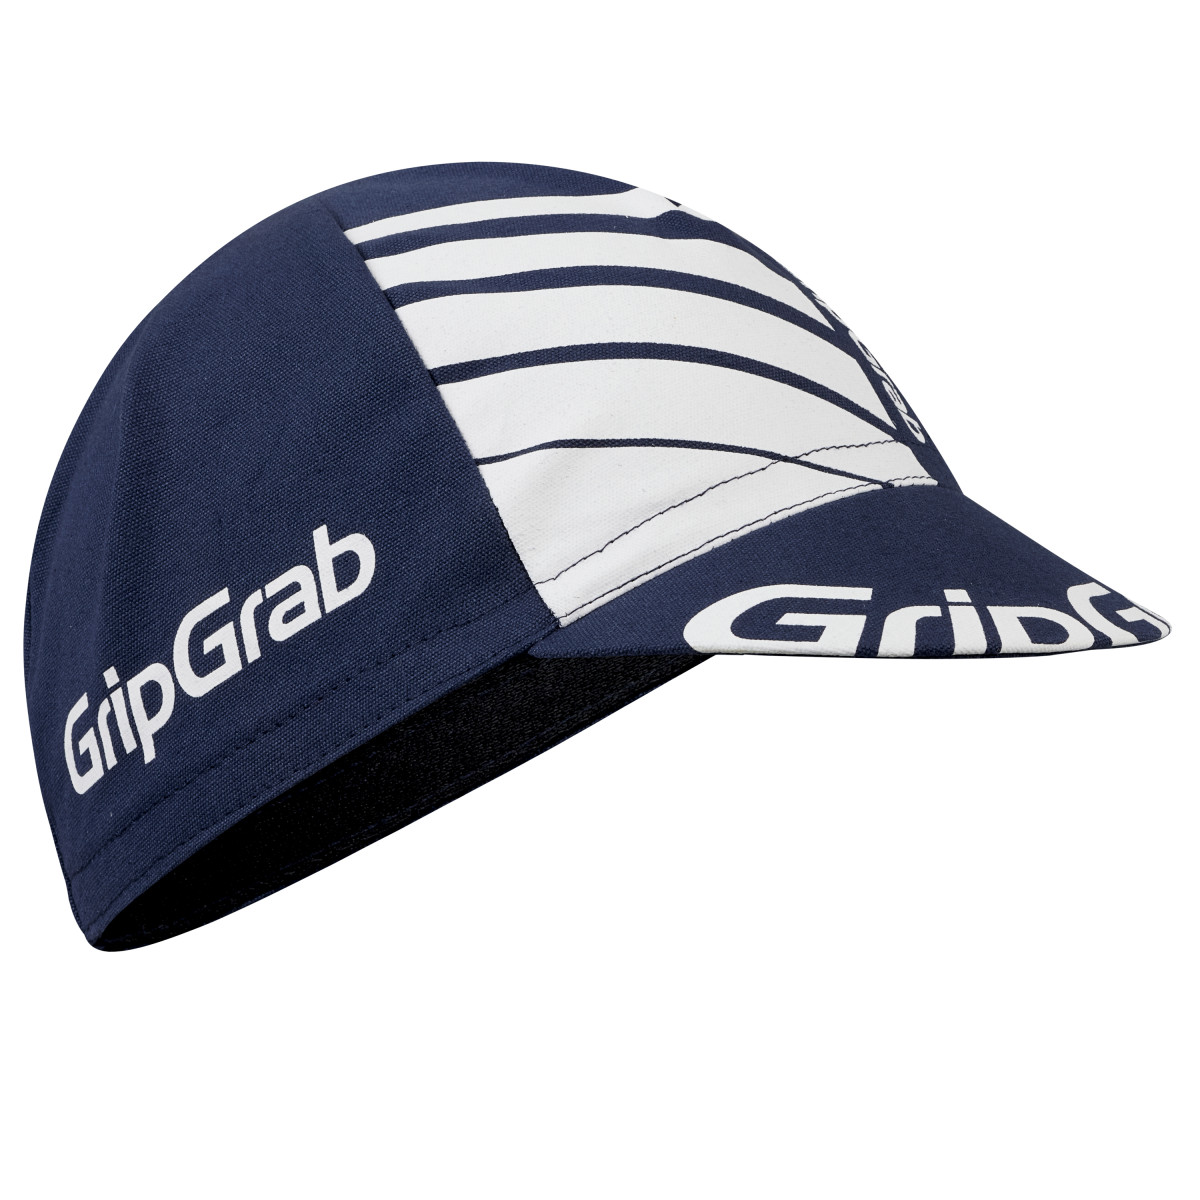 GripGrab Classic kepurė / Navy-White 